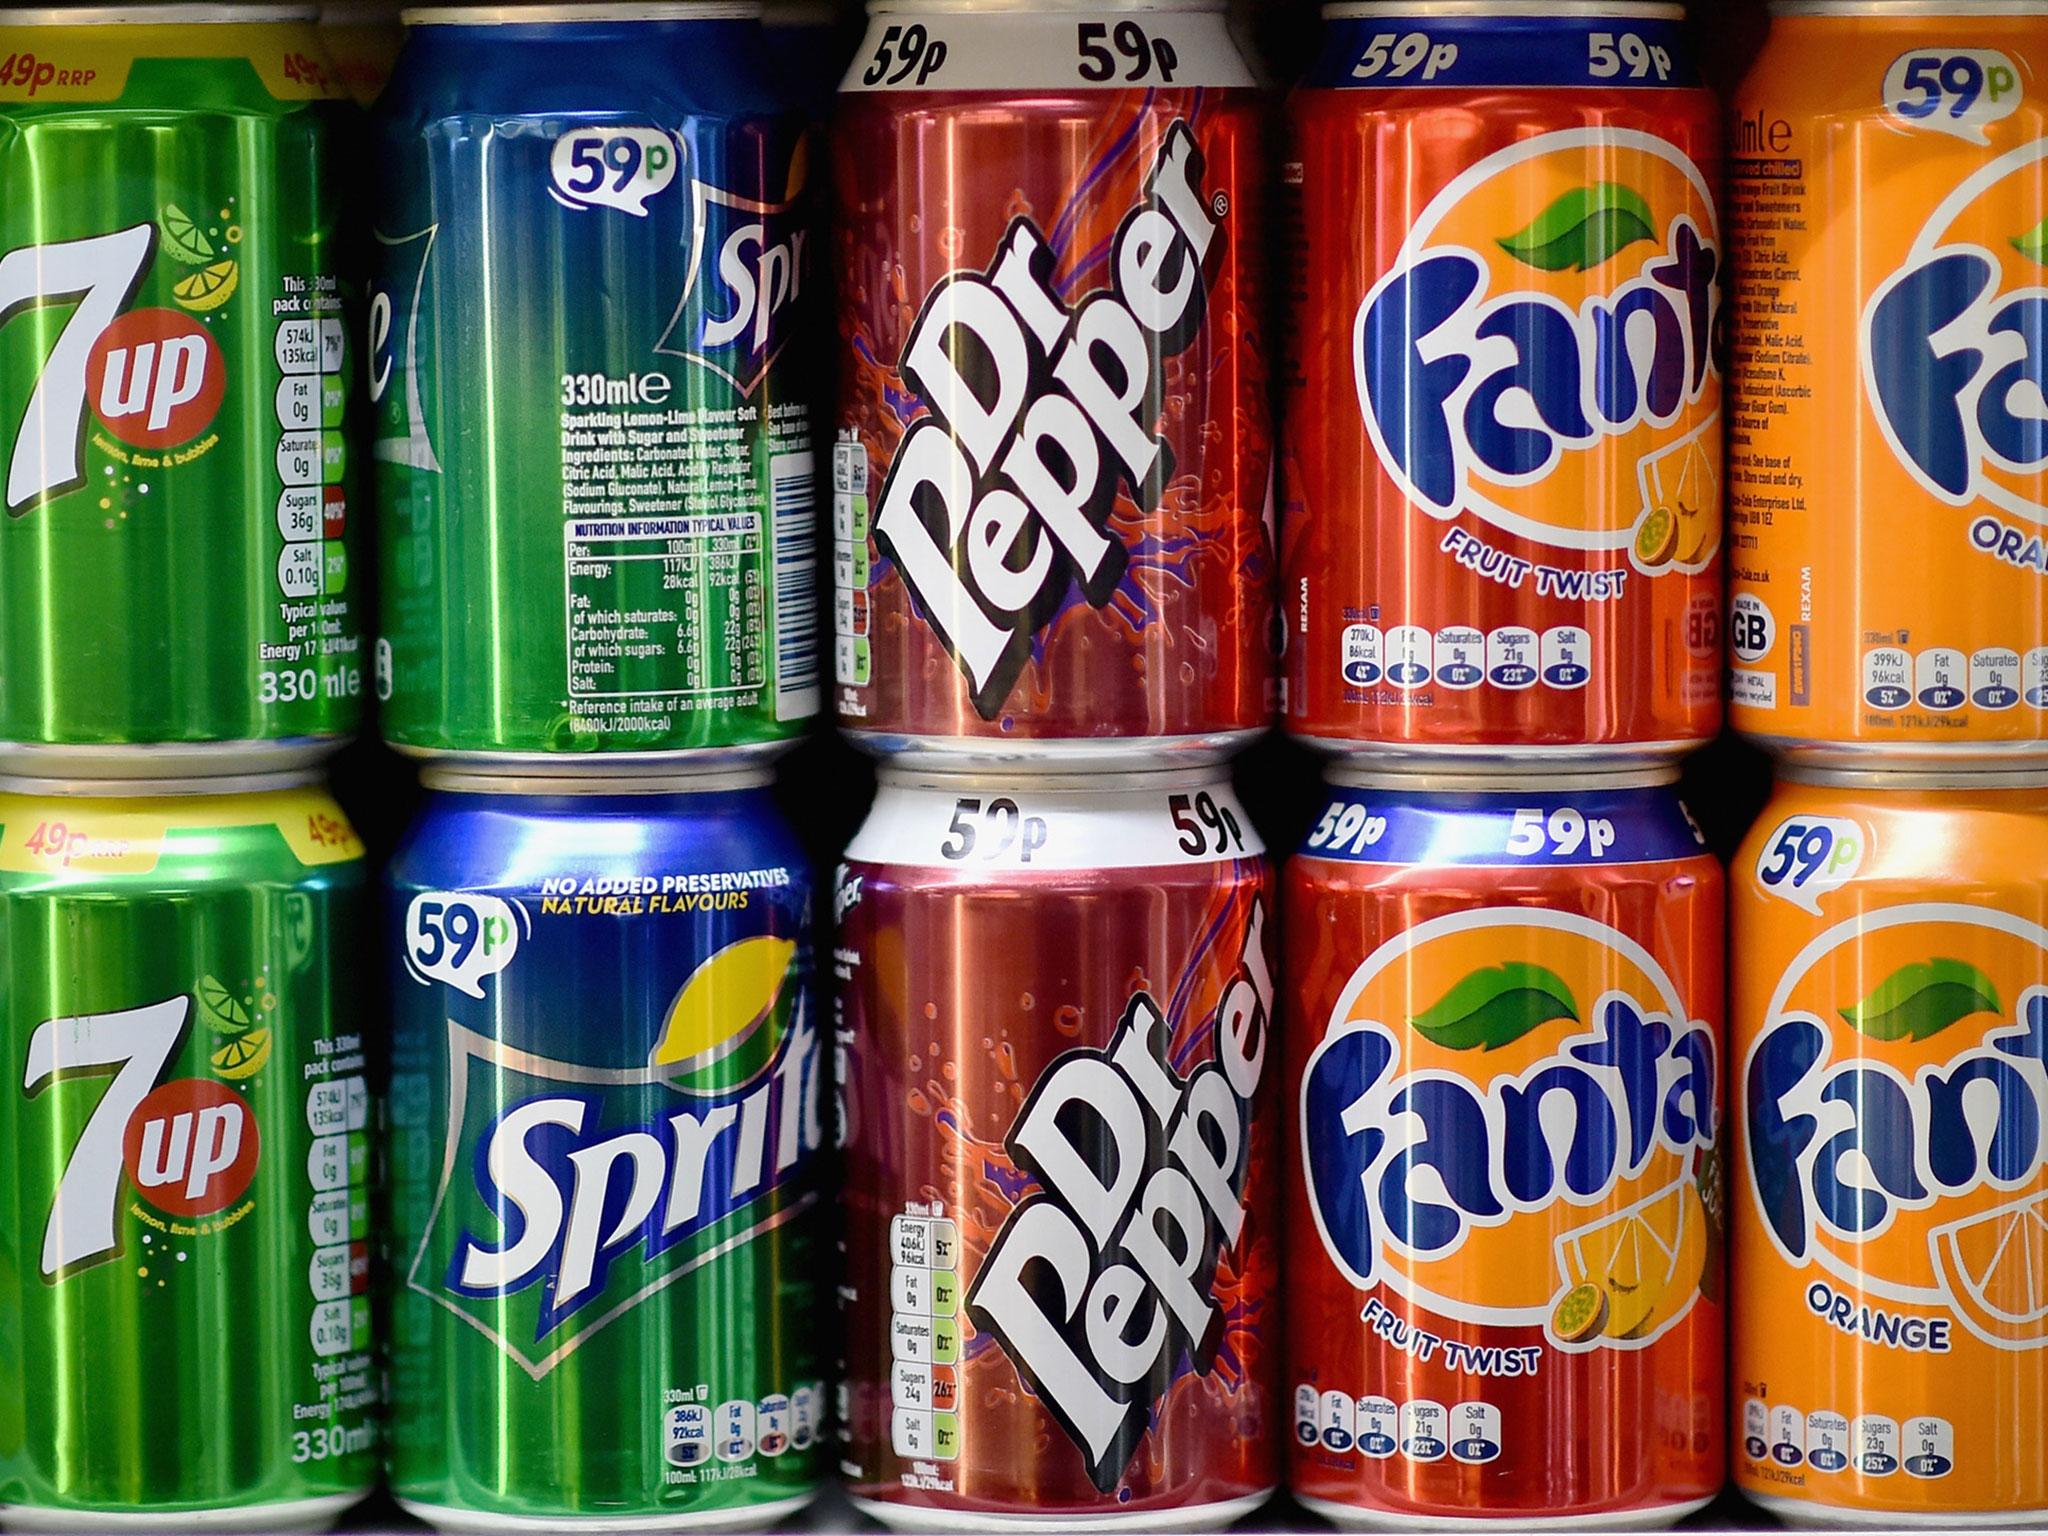 Sugar tax: soft drinks makers including Coca